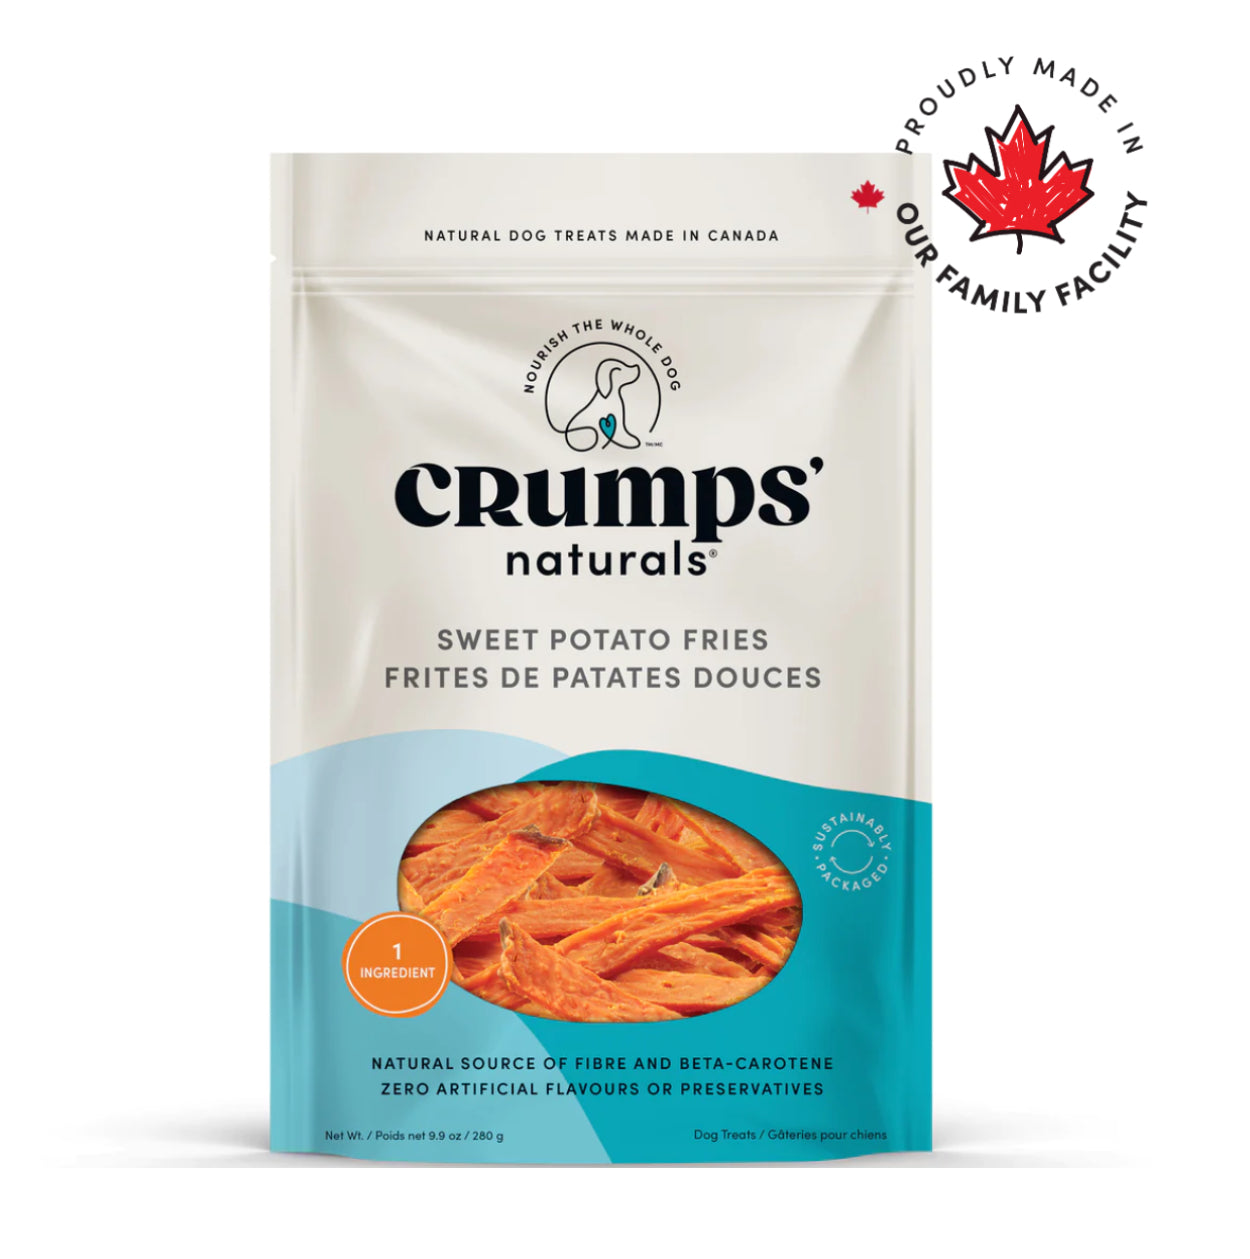 Crumps’ Naturals Sweet Potato Fries